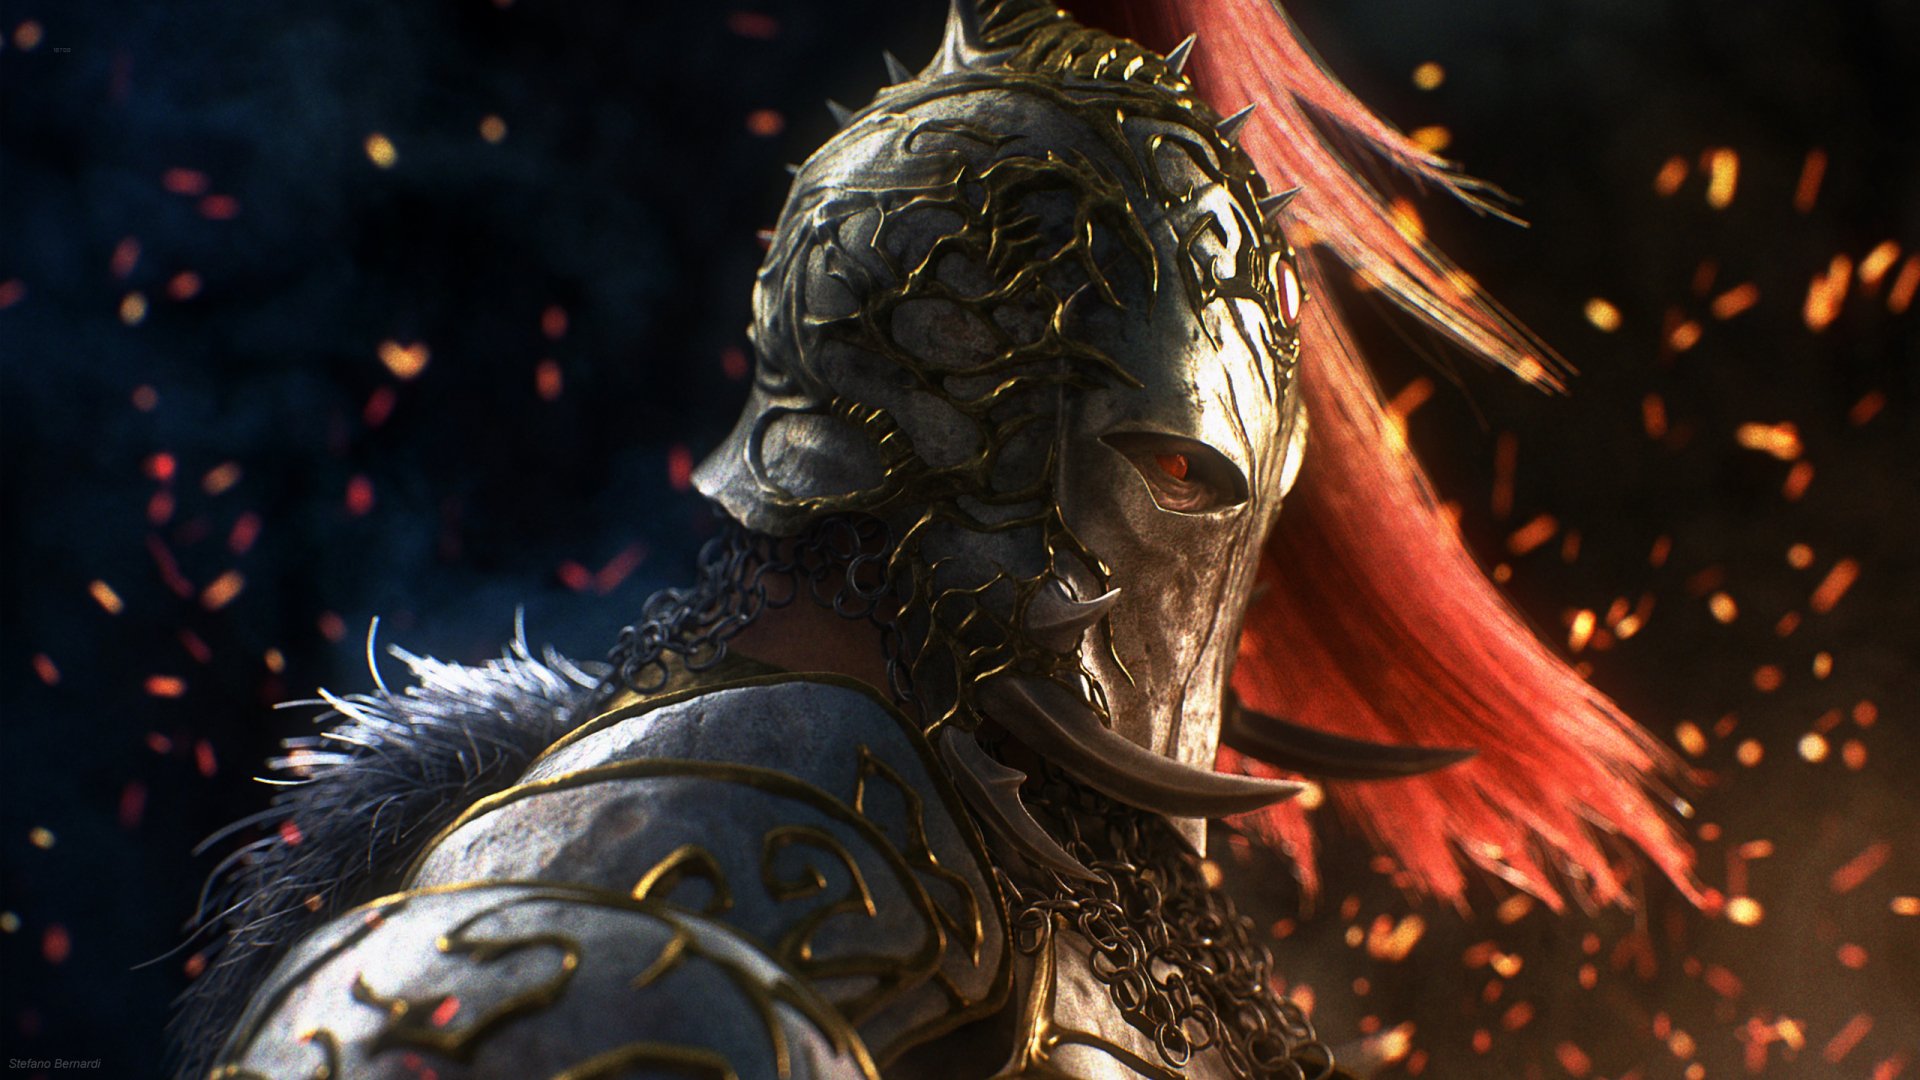 Download Fantasy Warrior Fantasy Warrior  HD Wallpaper by Stefano Bernardi